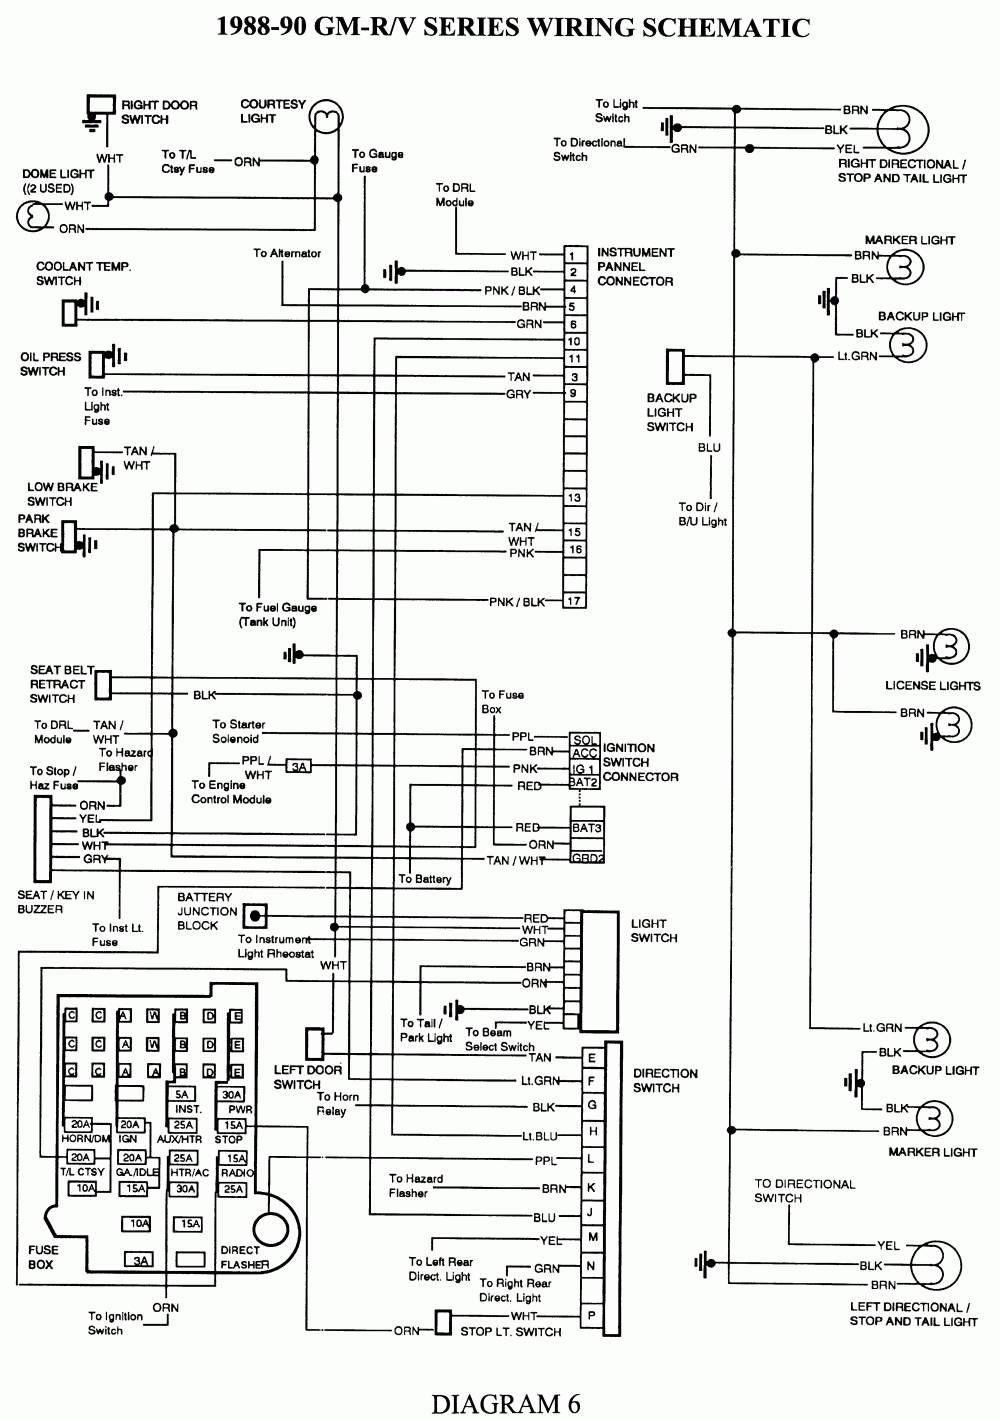 1995 Chevy Silverado Wiring Diagram - Wiring Diagram